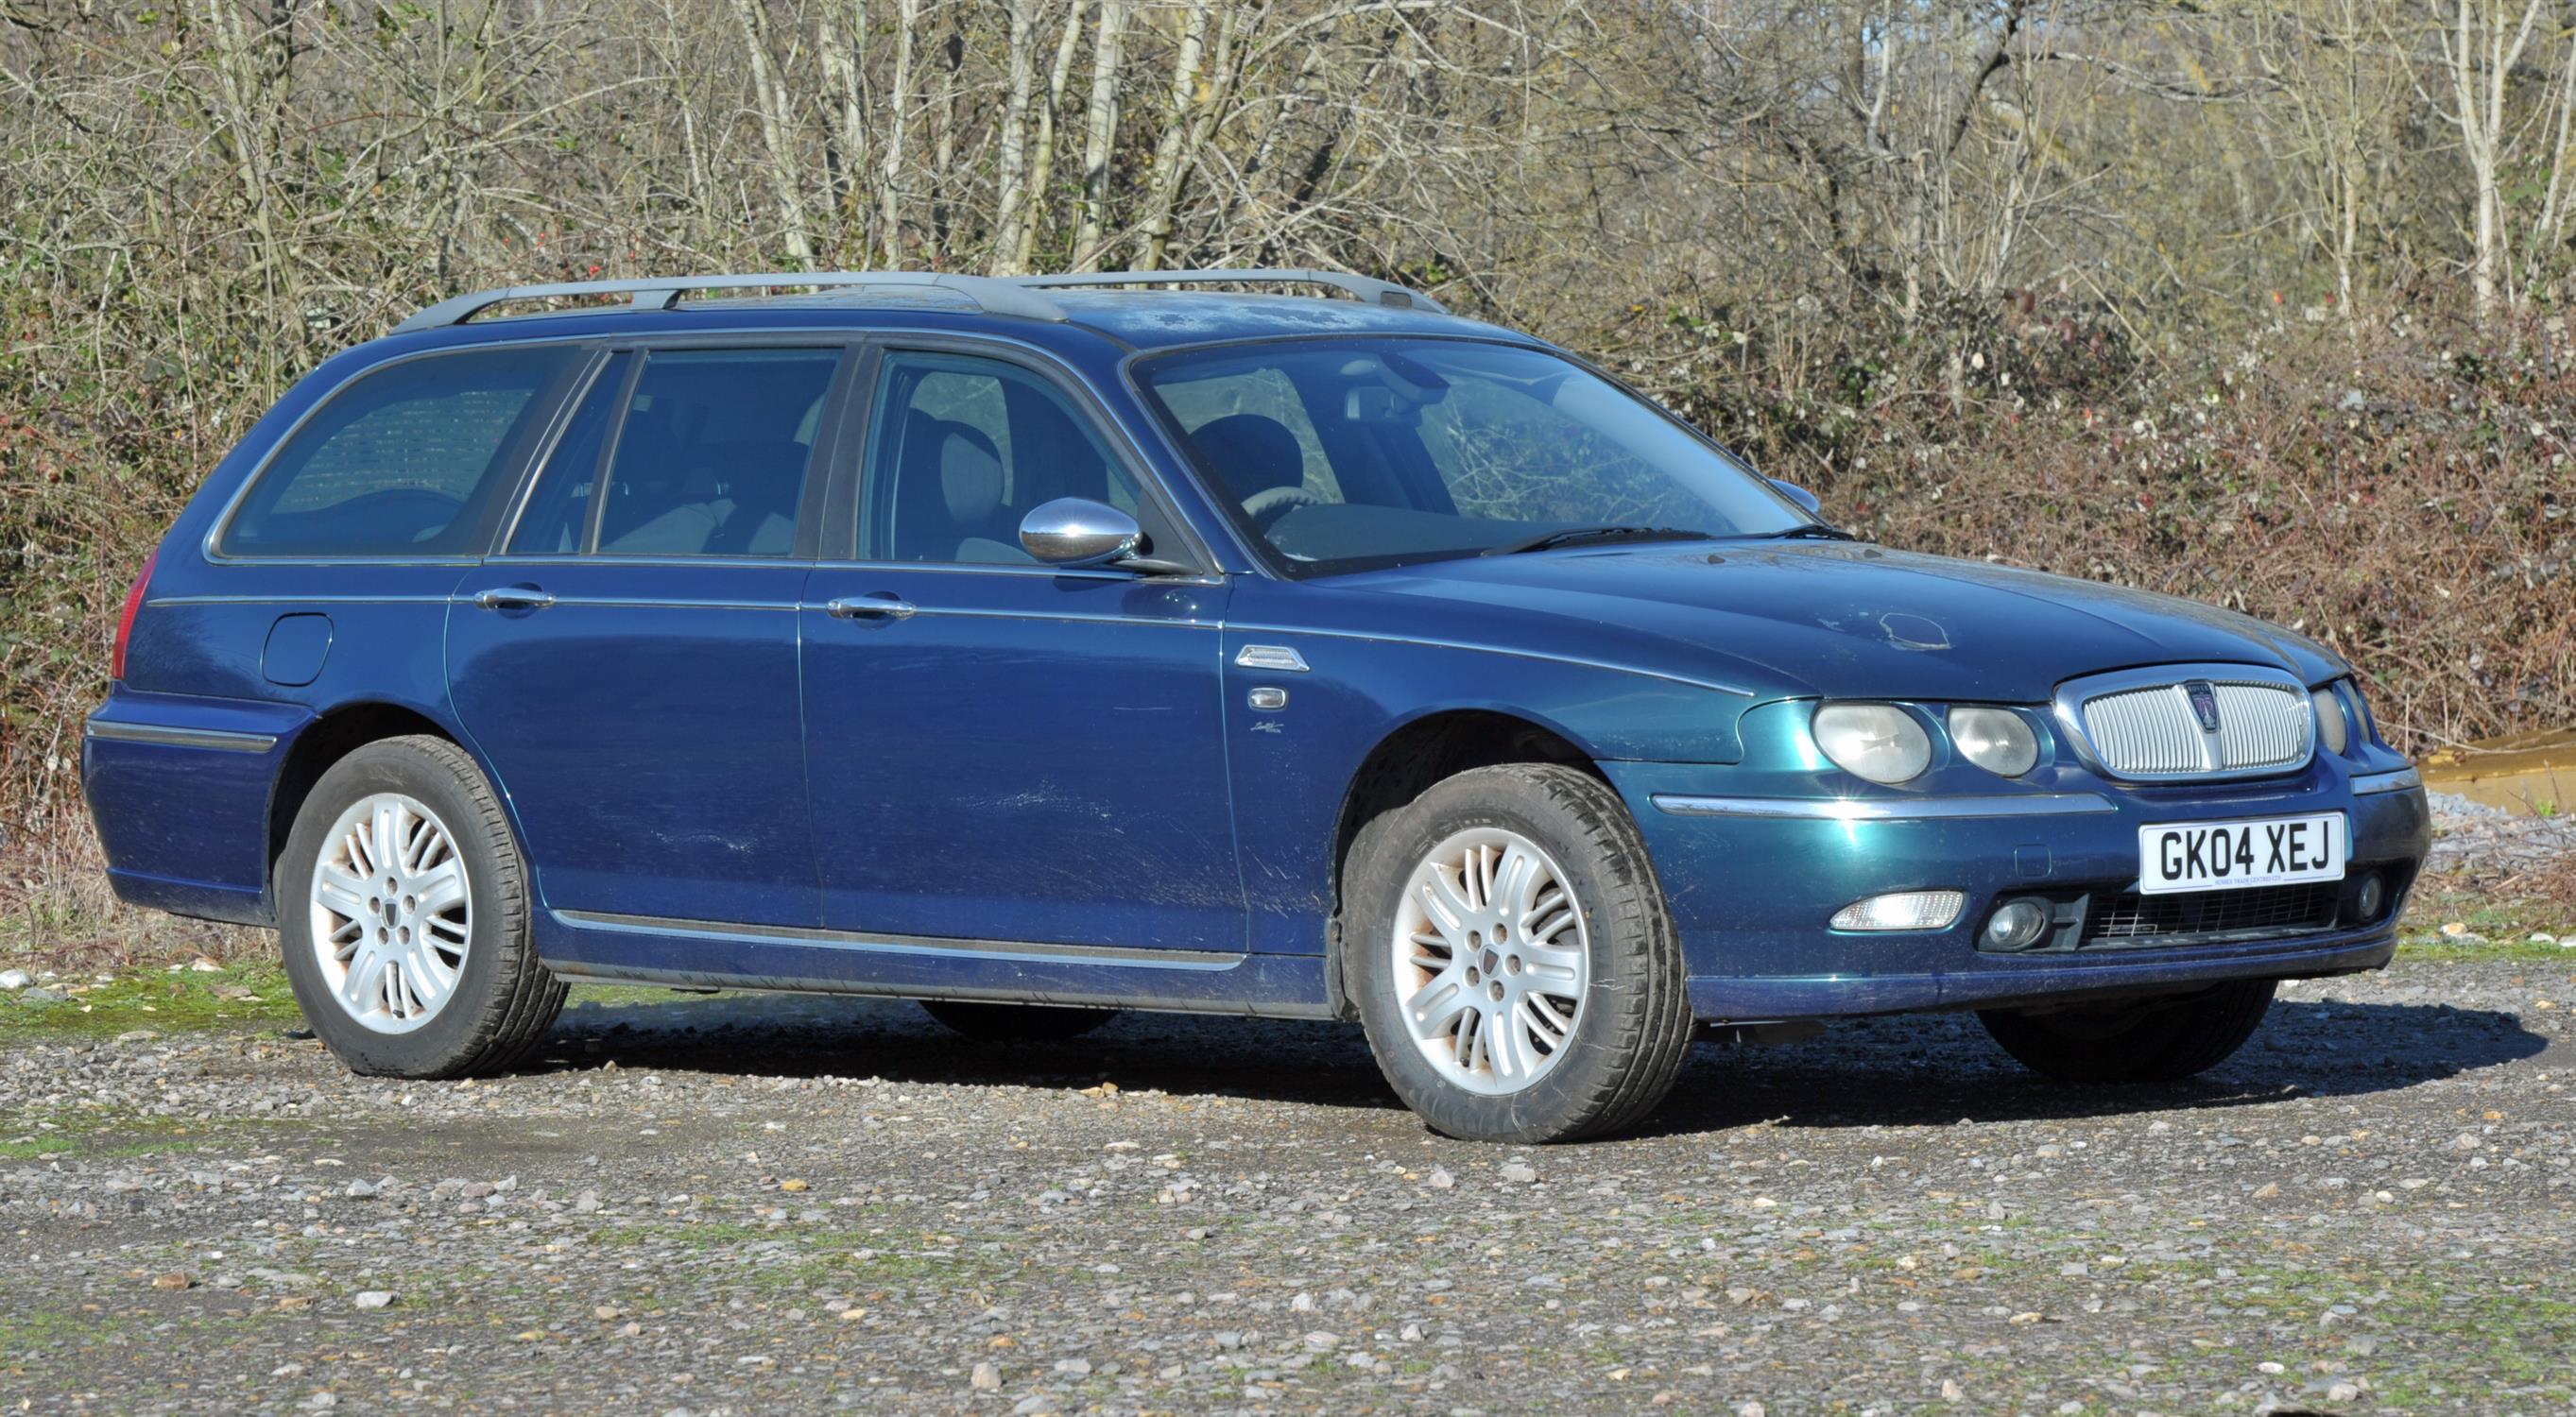 2004 Rover 75 2.0 V6 Petrol Touring/Estate Automatic. Registration number: GK04 XEJ. Genuine 88,